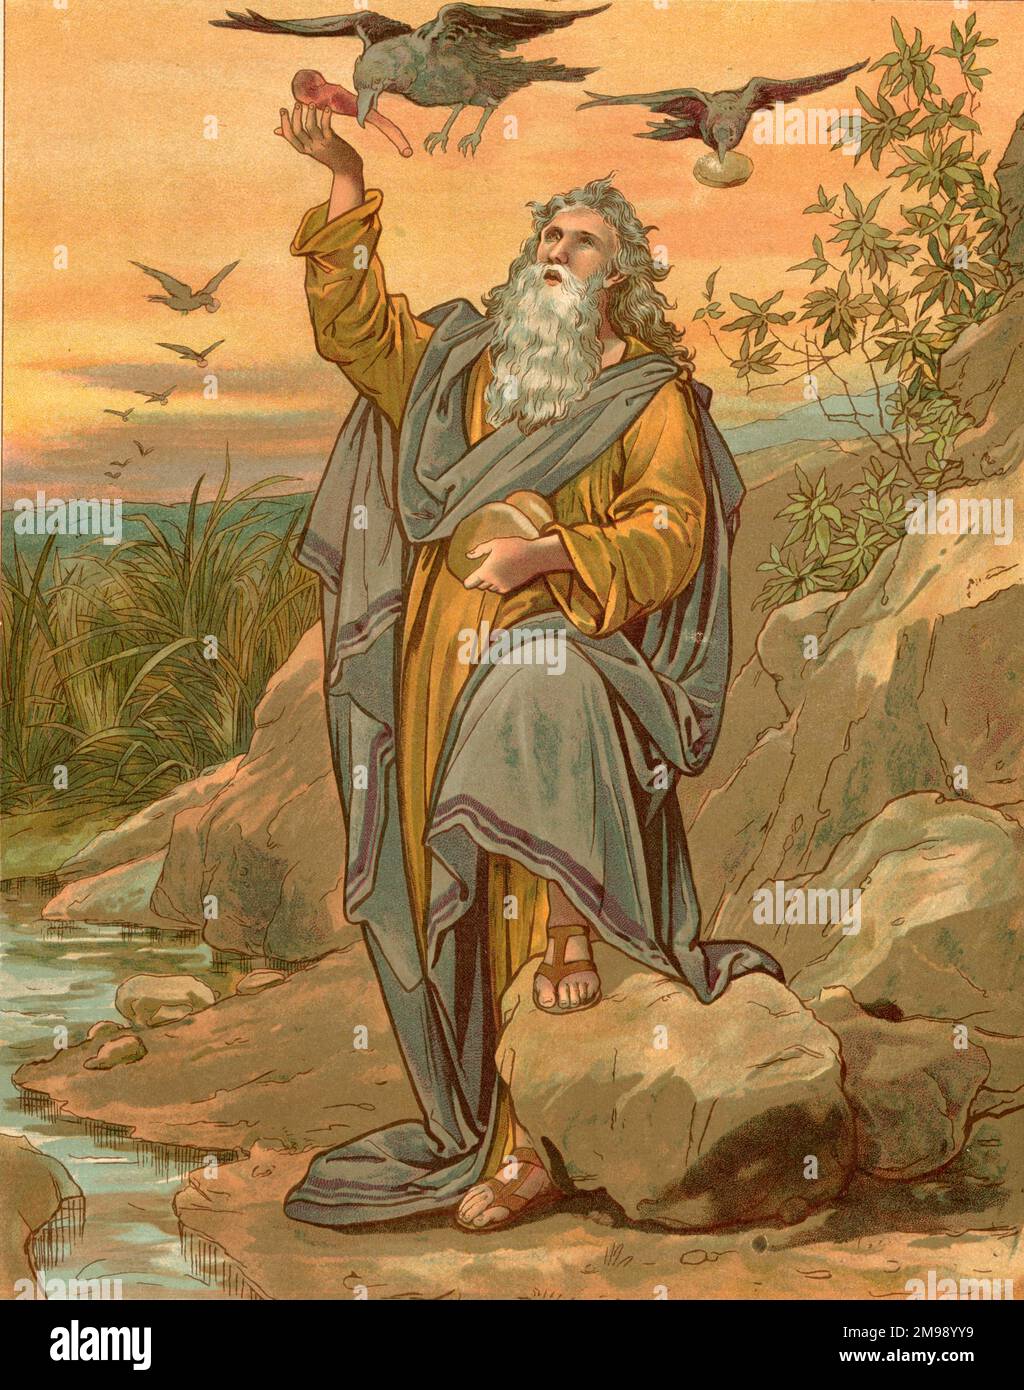 Les contes bibliques de John Lawson, le prophète Elijah. Banque D'Images